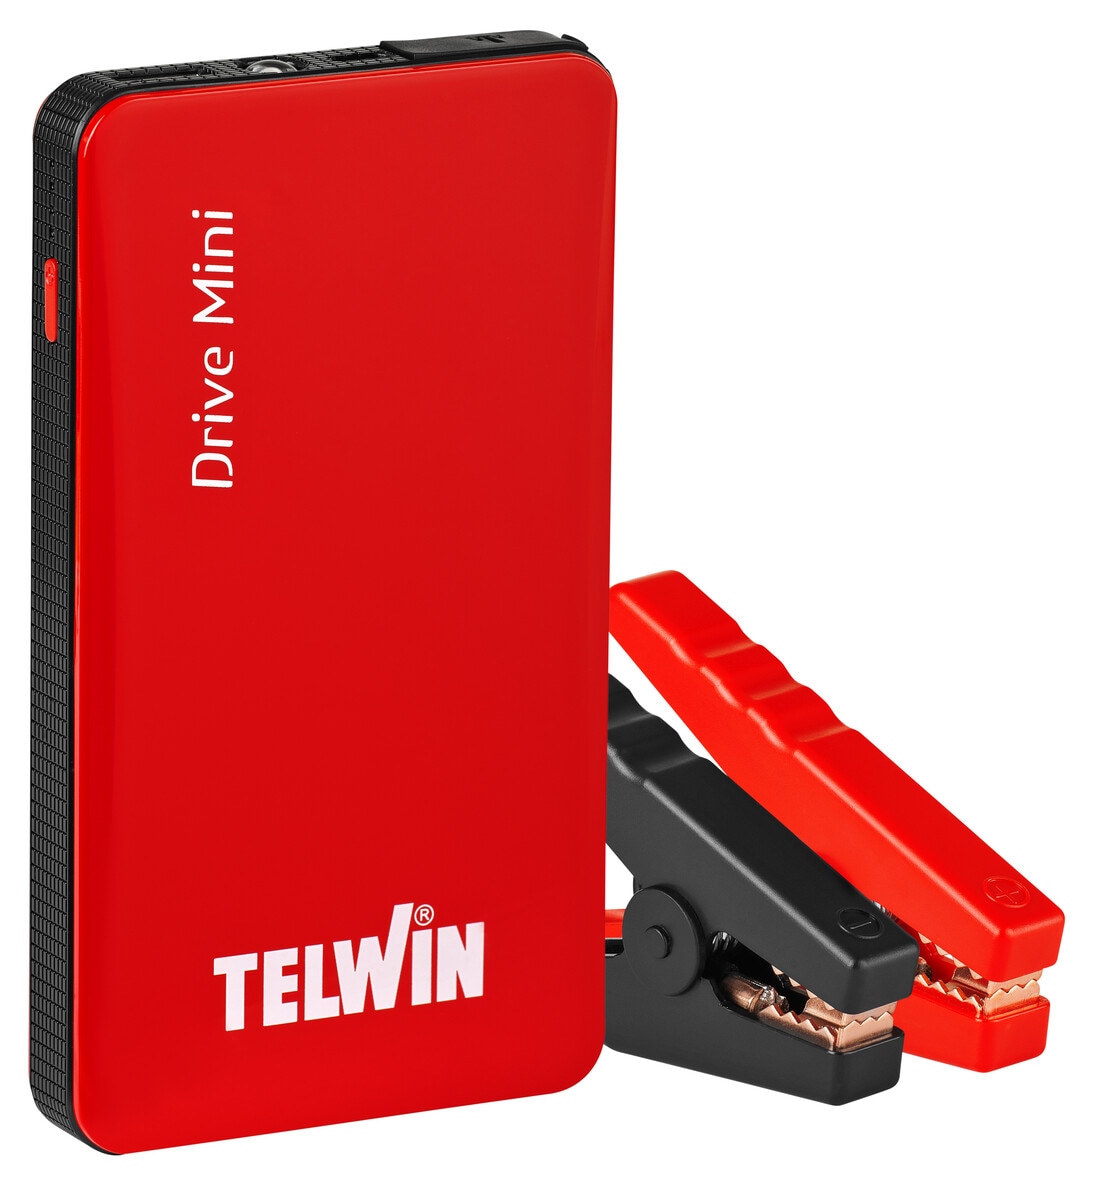 Telwin Drive Mini starthjälp 12 V och powerbank